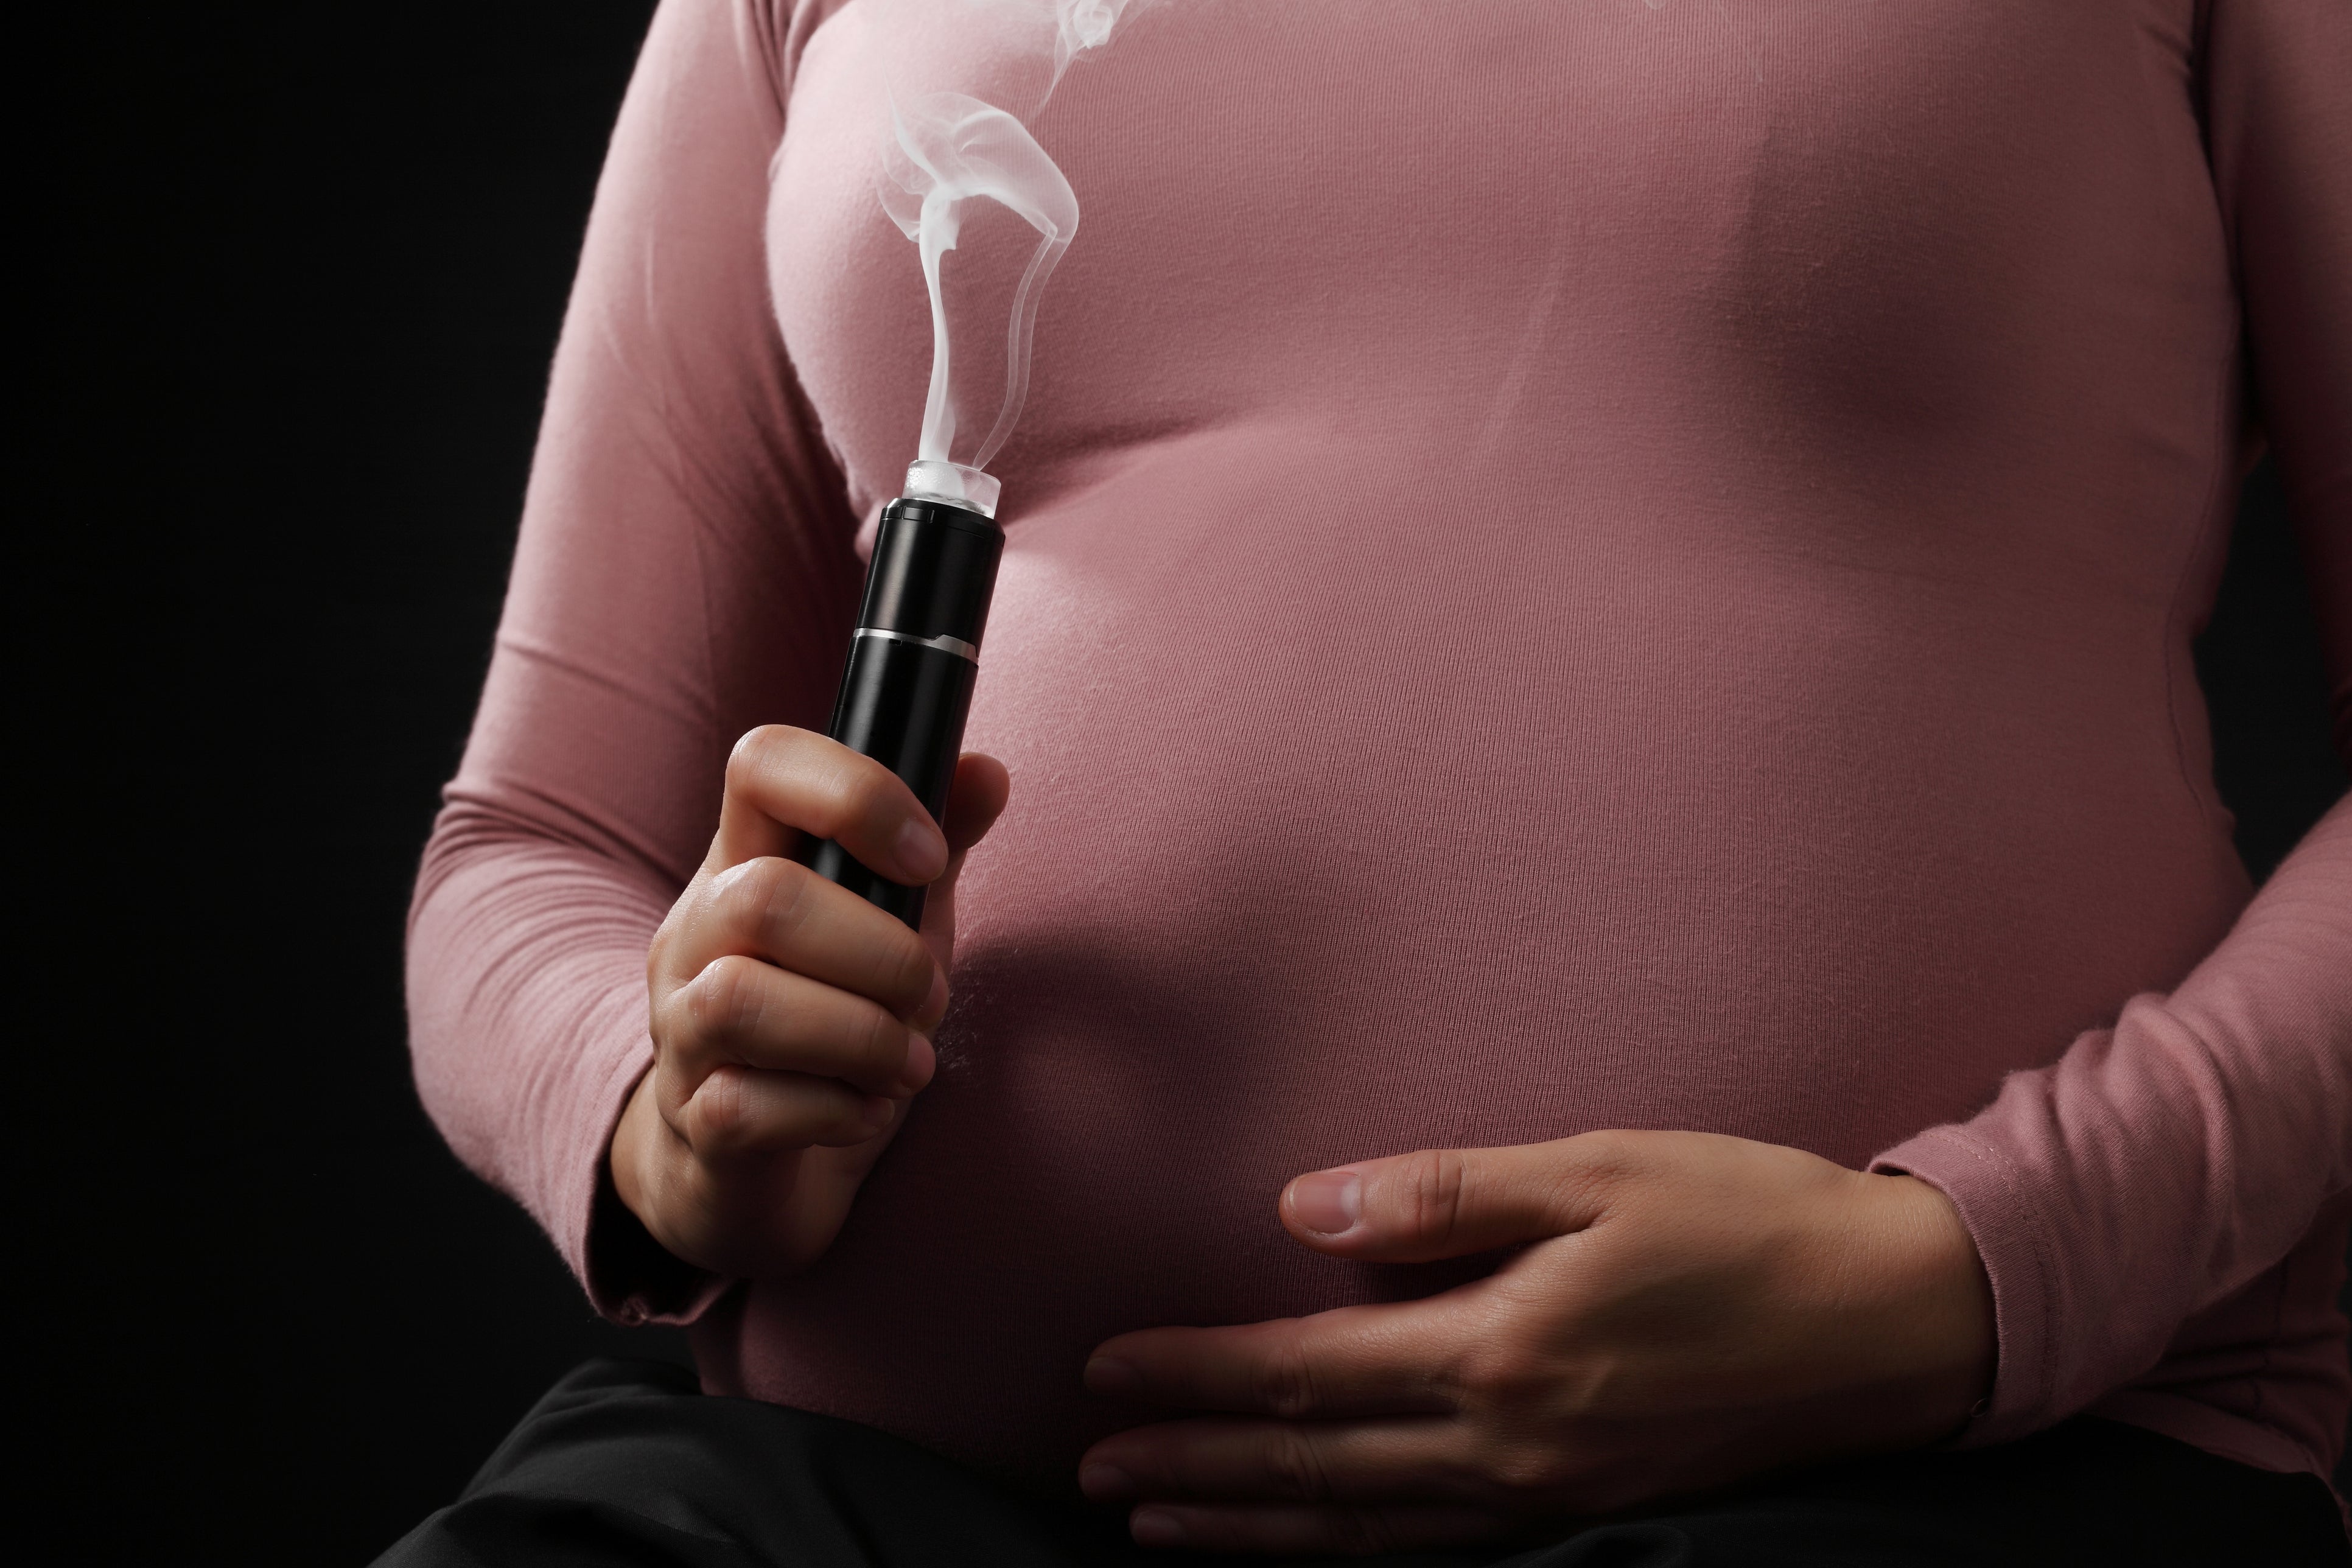 The latest study used women’s saliva to measure their exposure to nicotine